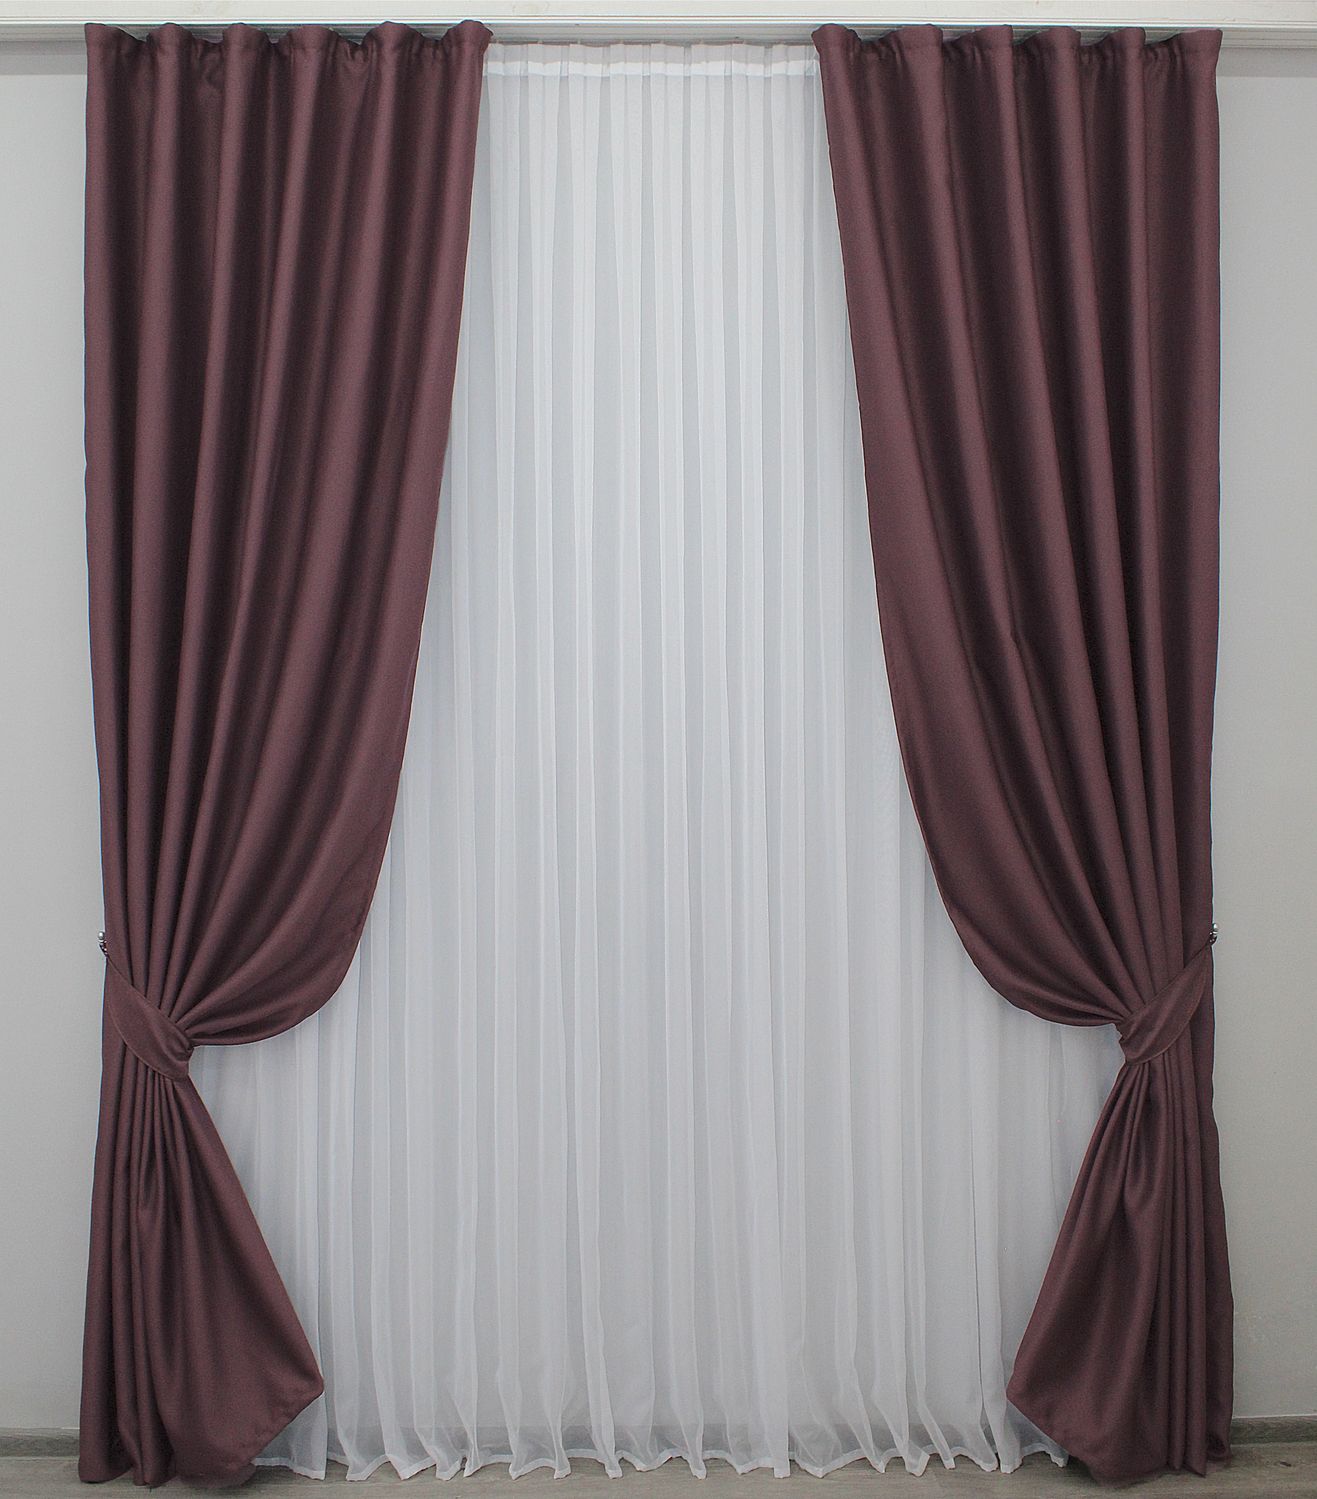 Комплект штор із тканини блекаут "Fusion Dimout" колір марсала 828ш, Марсала, Комплект штор (2шт. 1,5х2,7м.), 1,5 м., 2,7 м., 150, 270, 2 - 3 м., В комплекті 2 шт., Тасьма